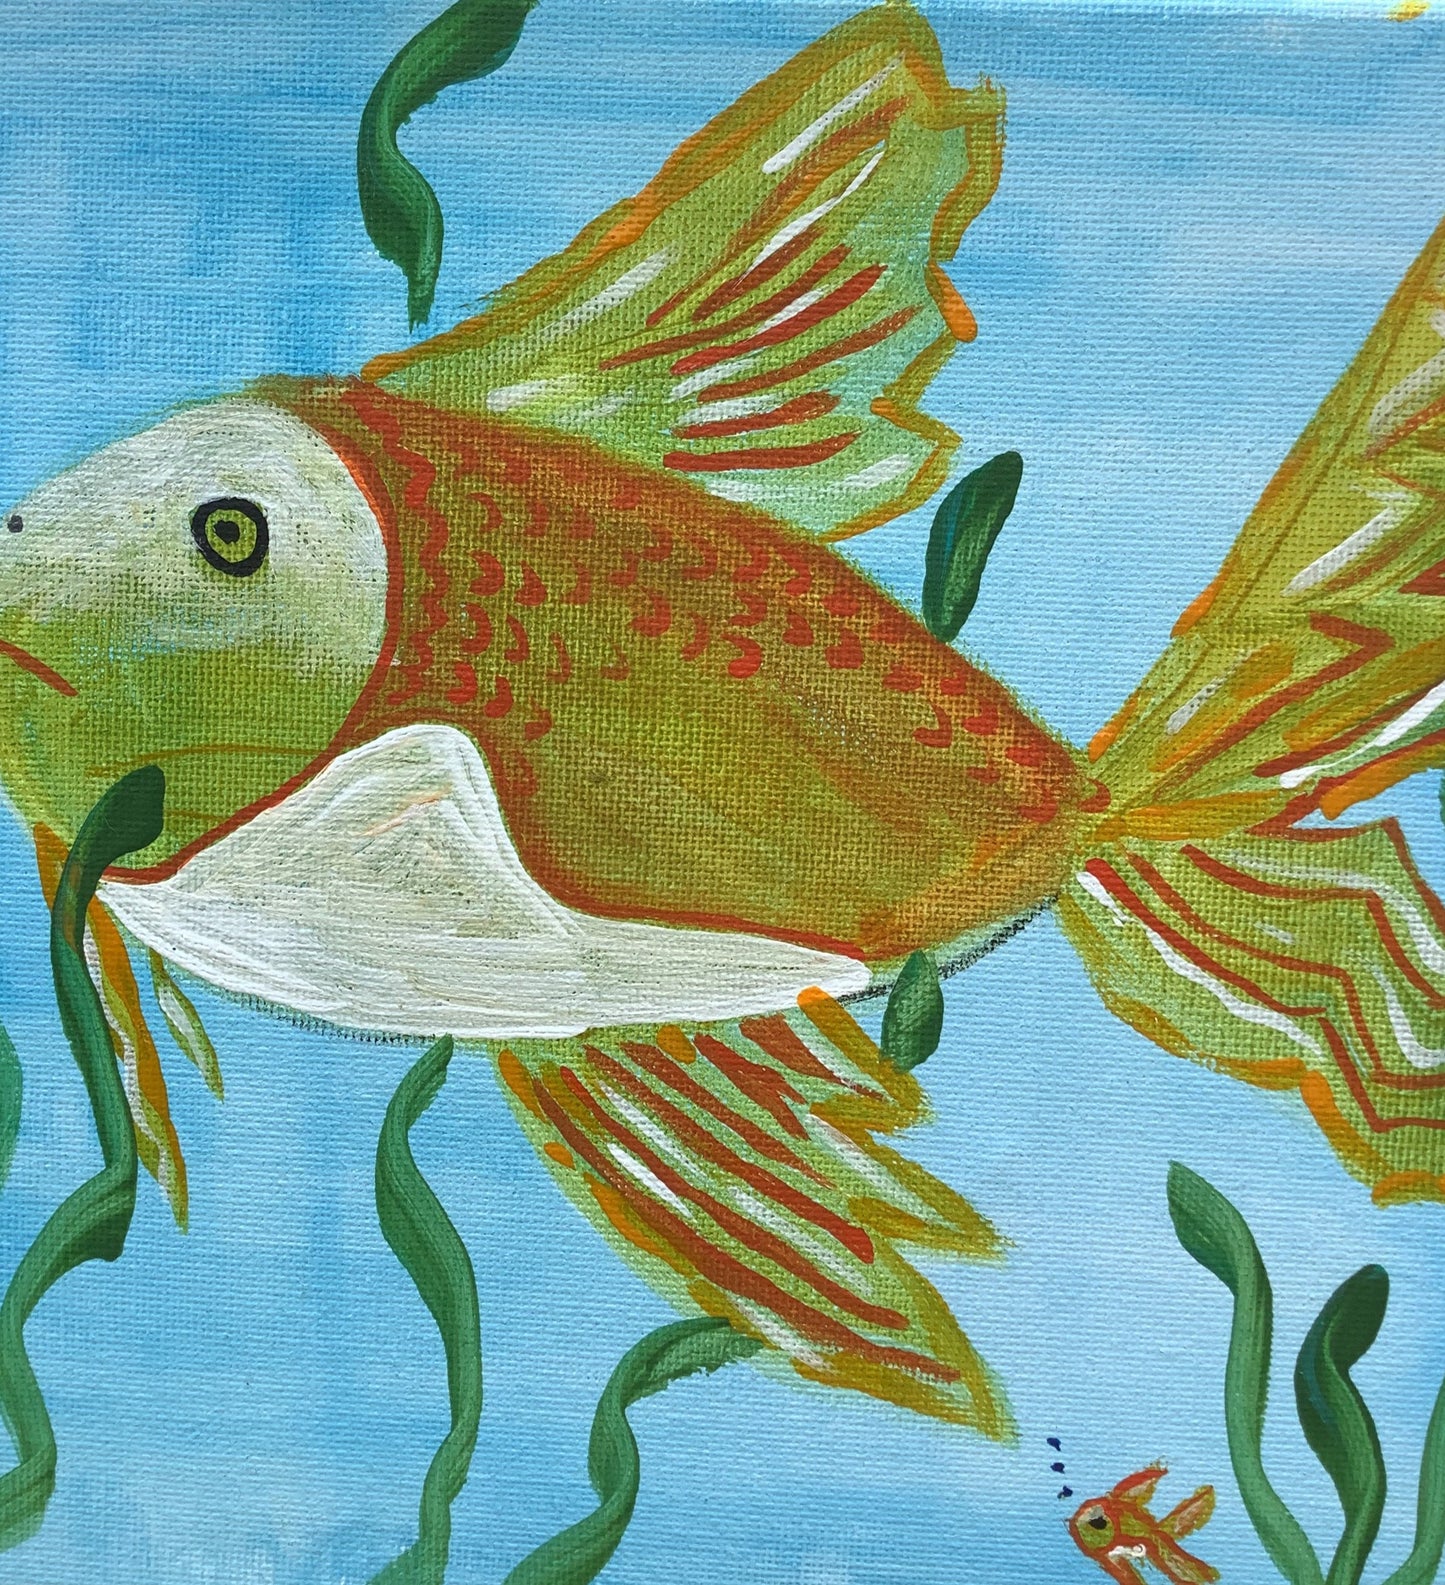 Mr. Fish 10" x 8"